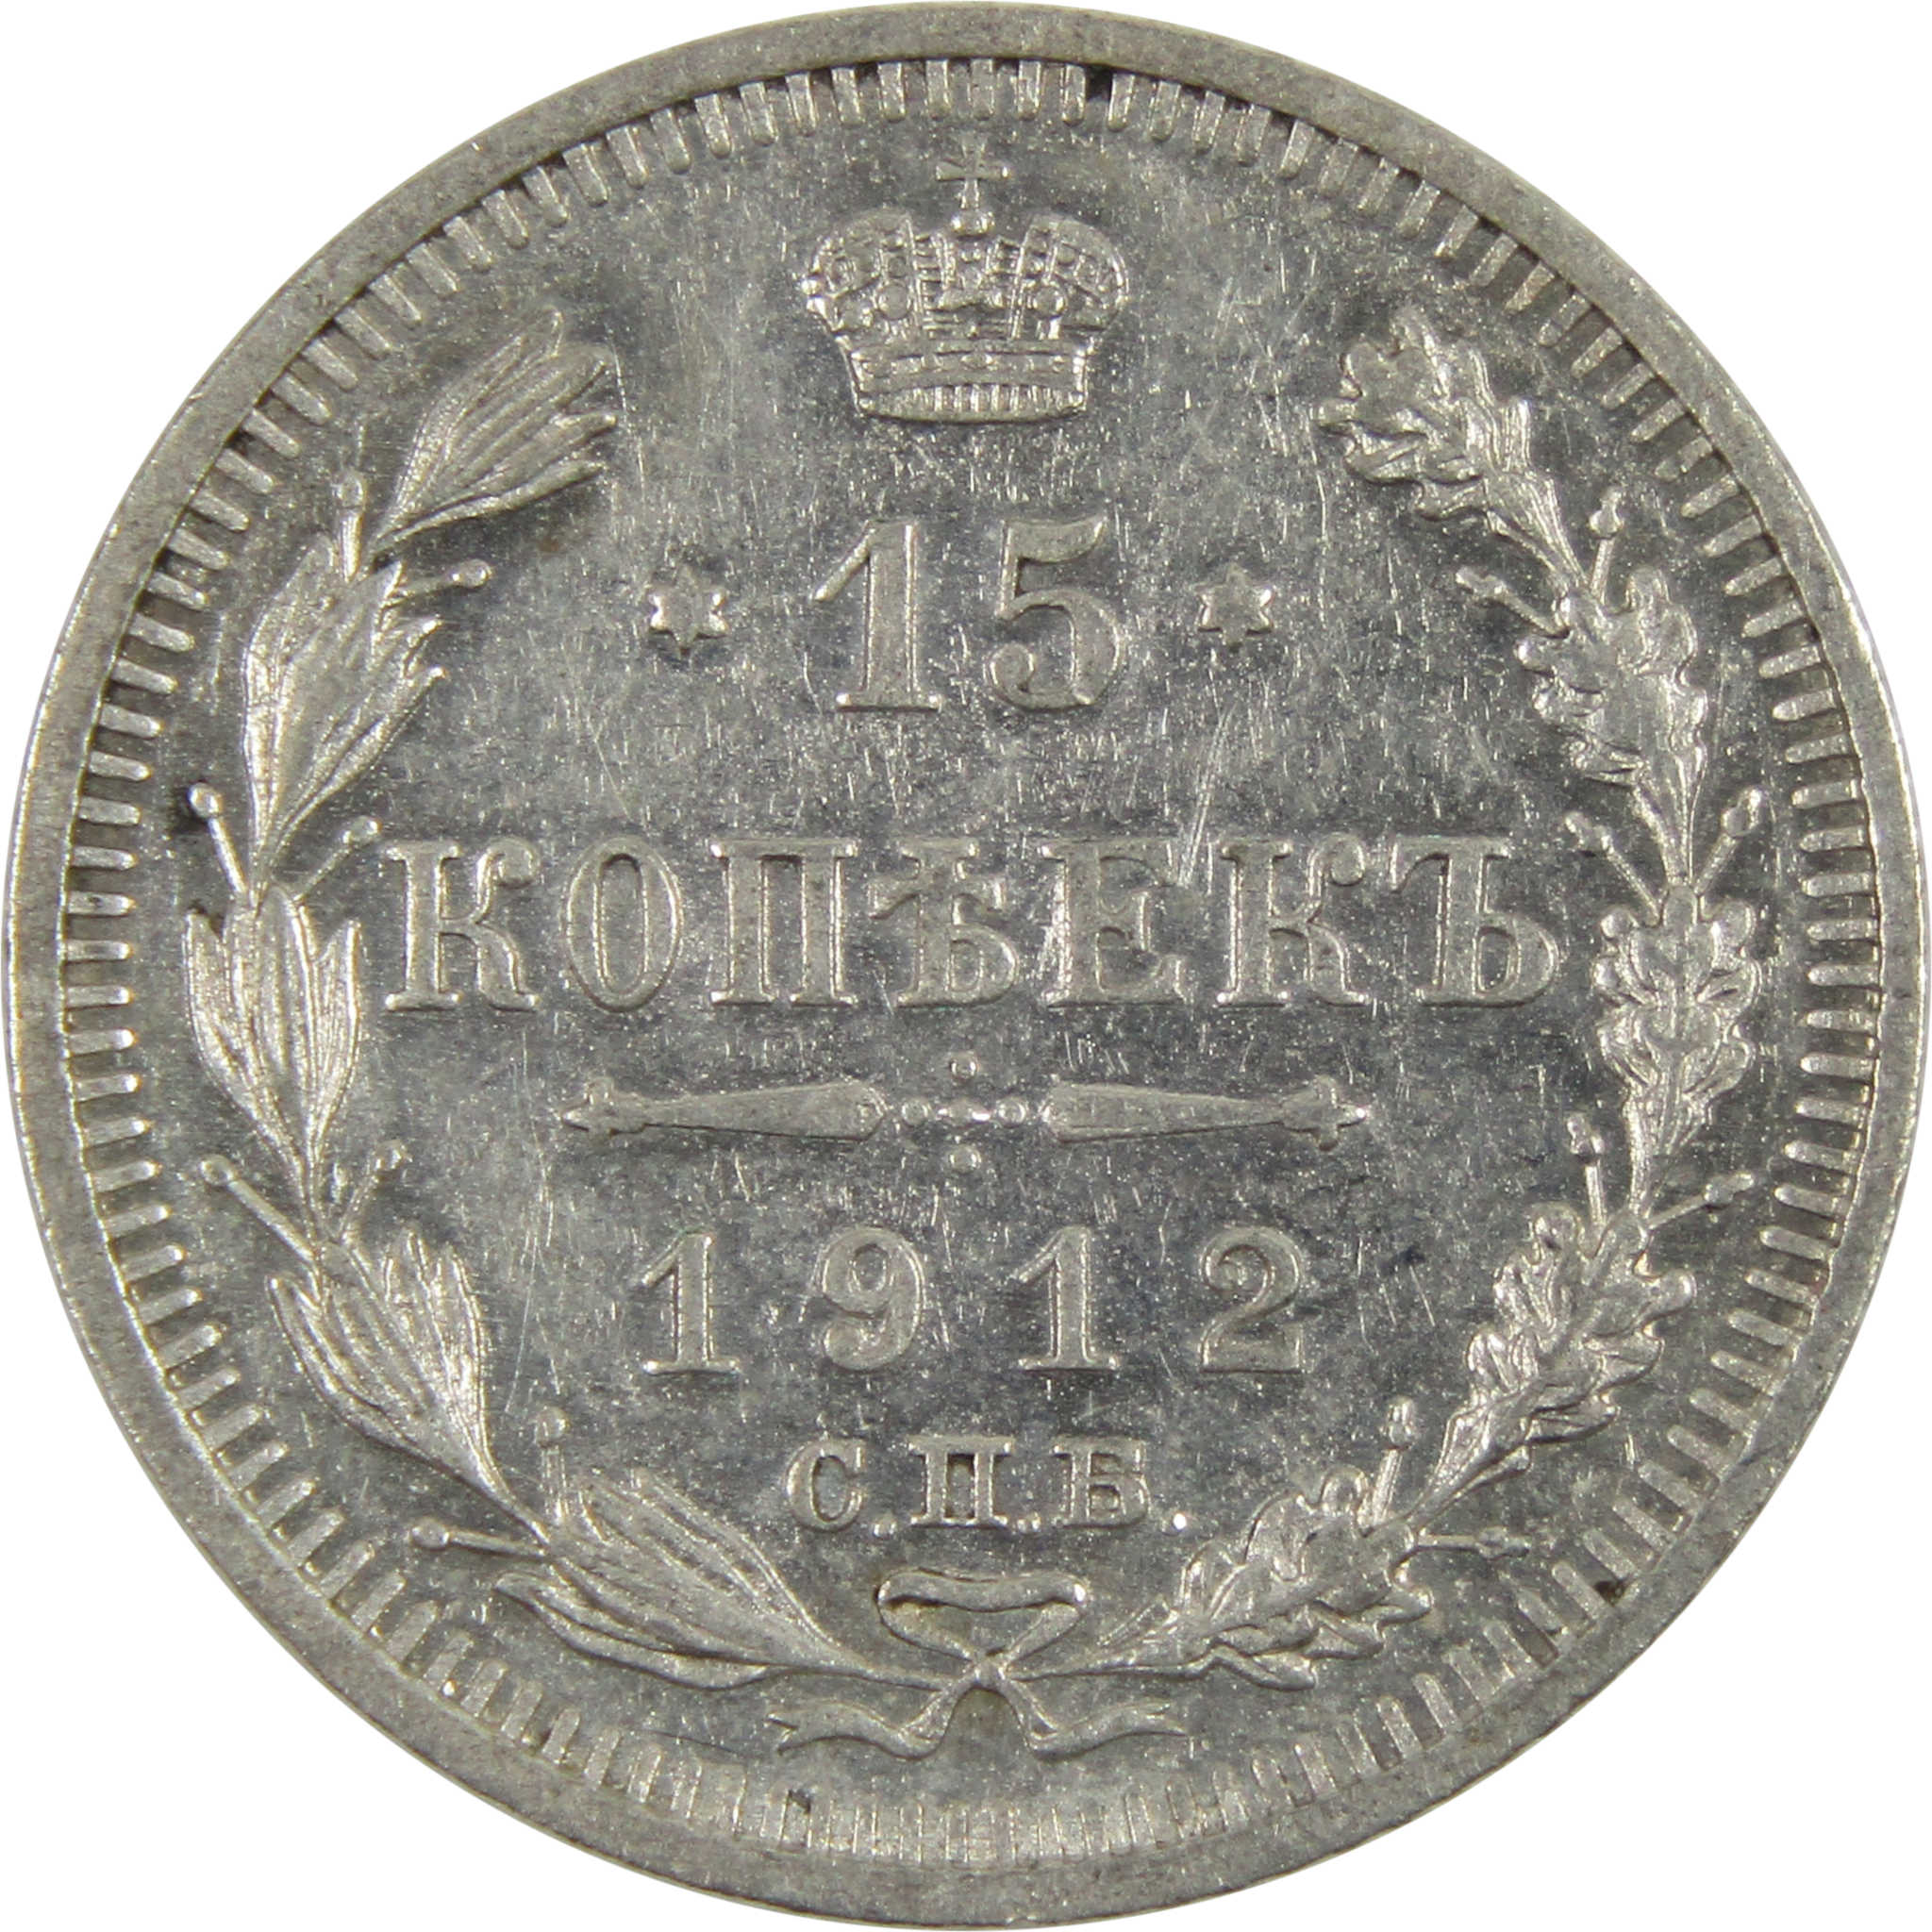 Historic Russian Silver 3-Coin Set